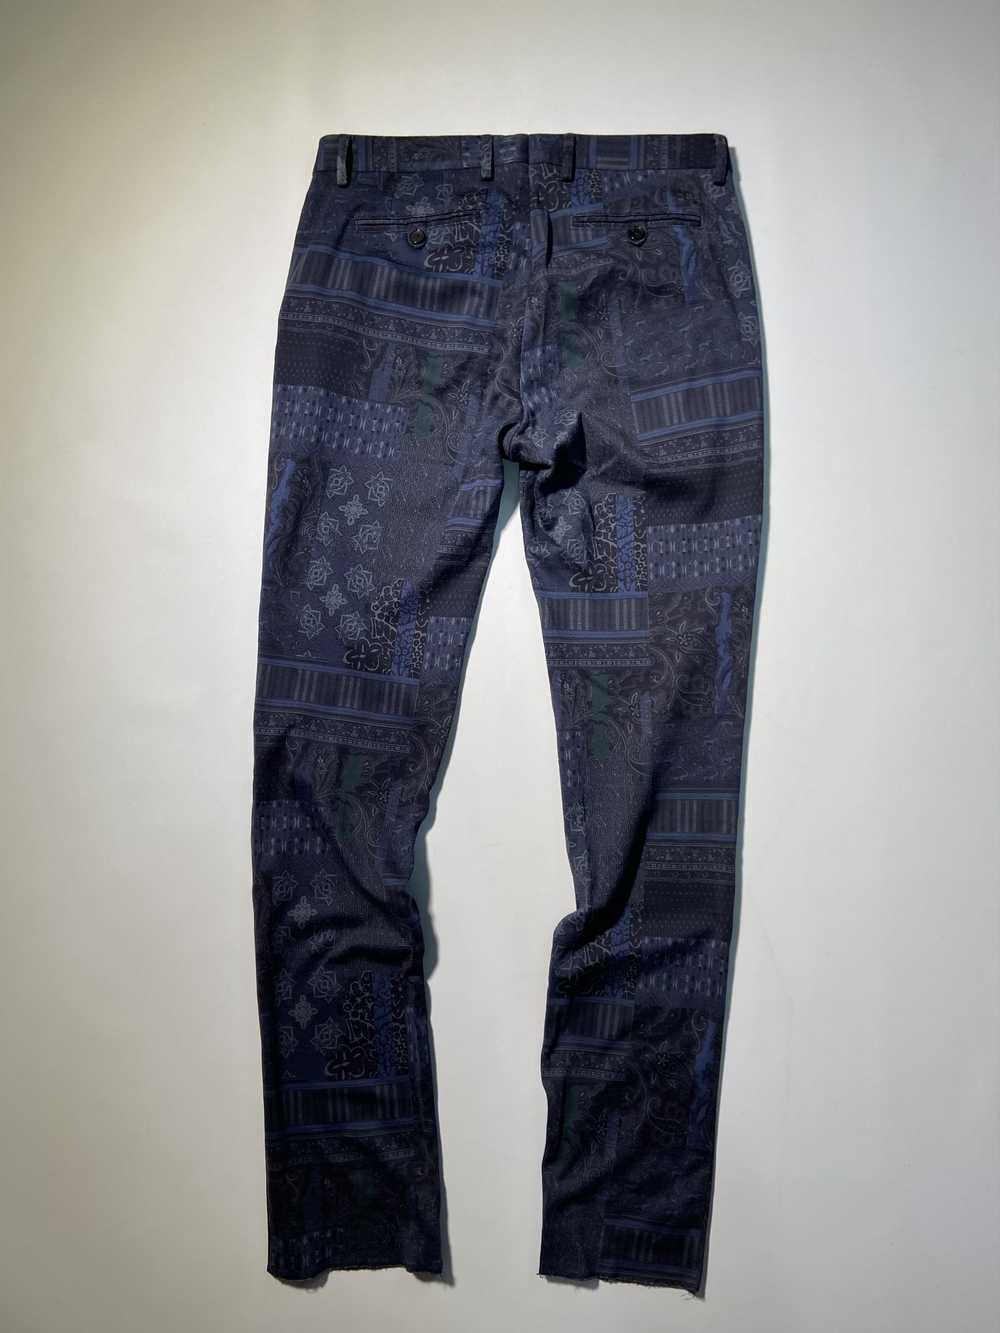 Etro Etro slim fit patterned pants - image 9